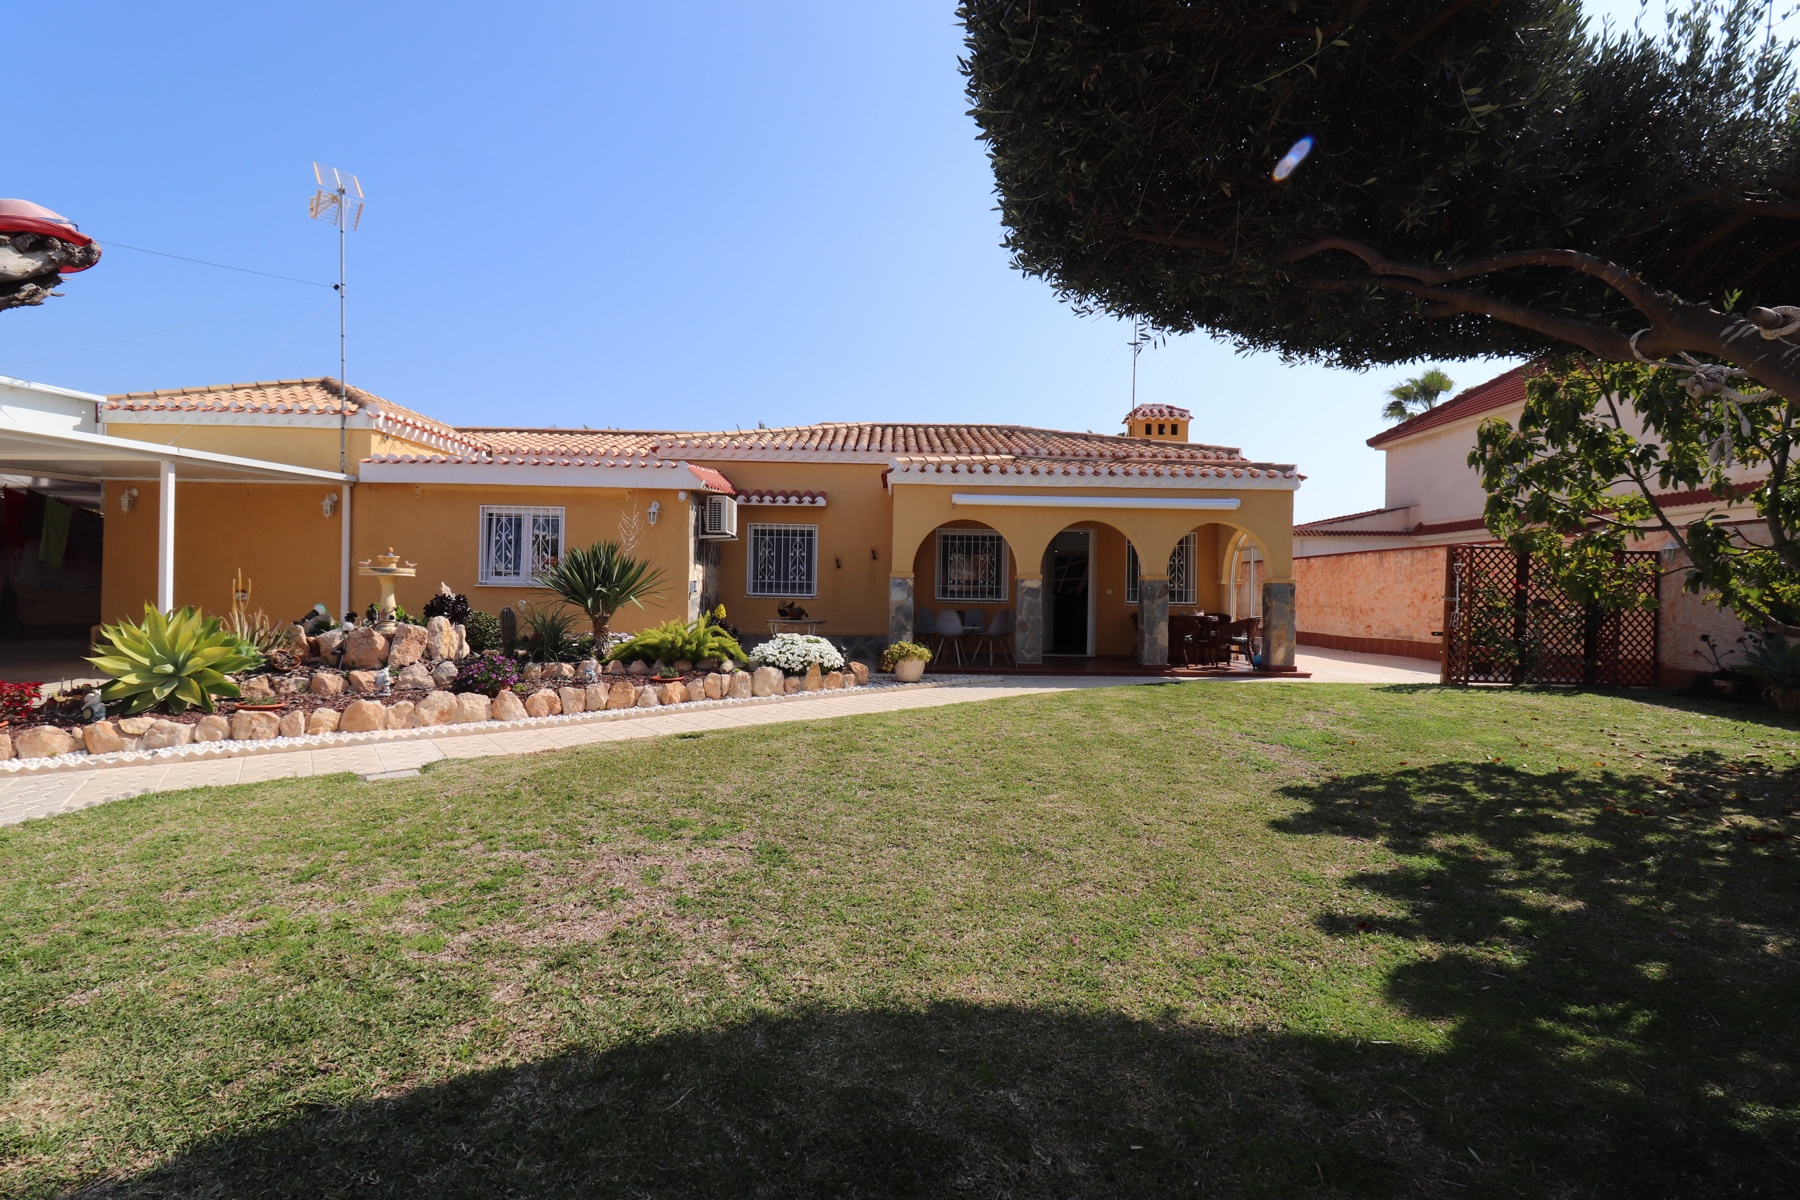 3 bedroom house / villa for sale in Torrevieja, Costa Blanca